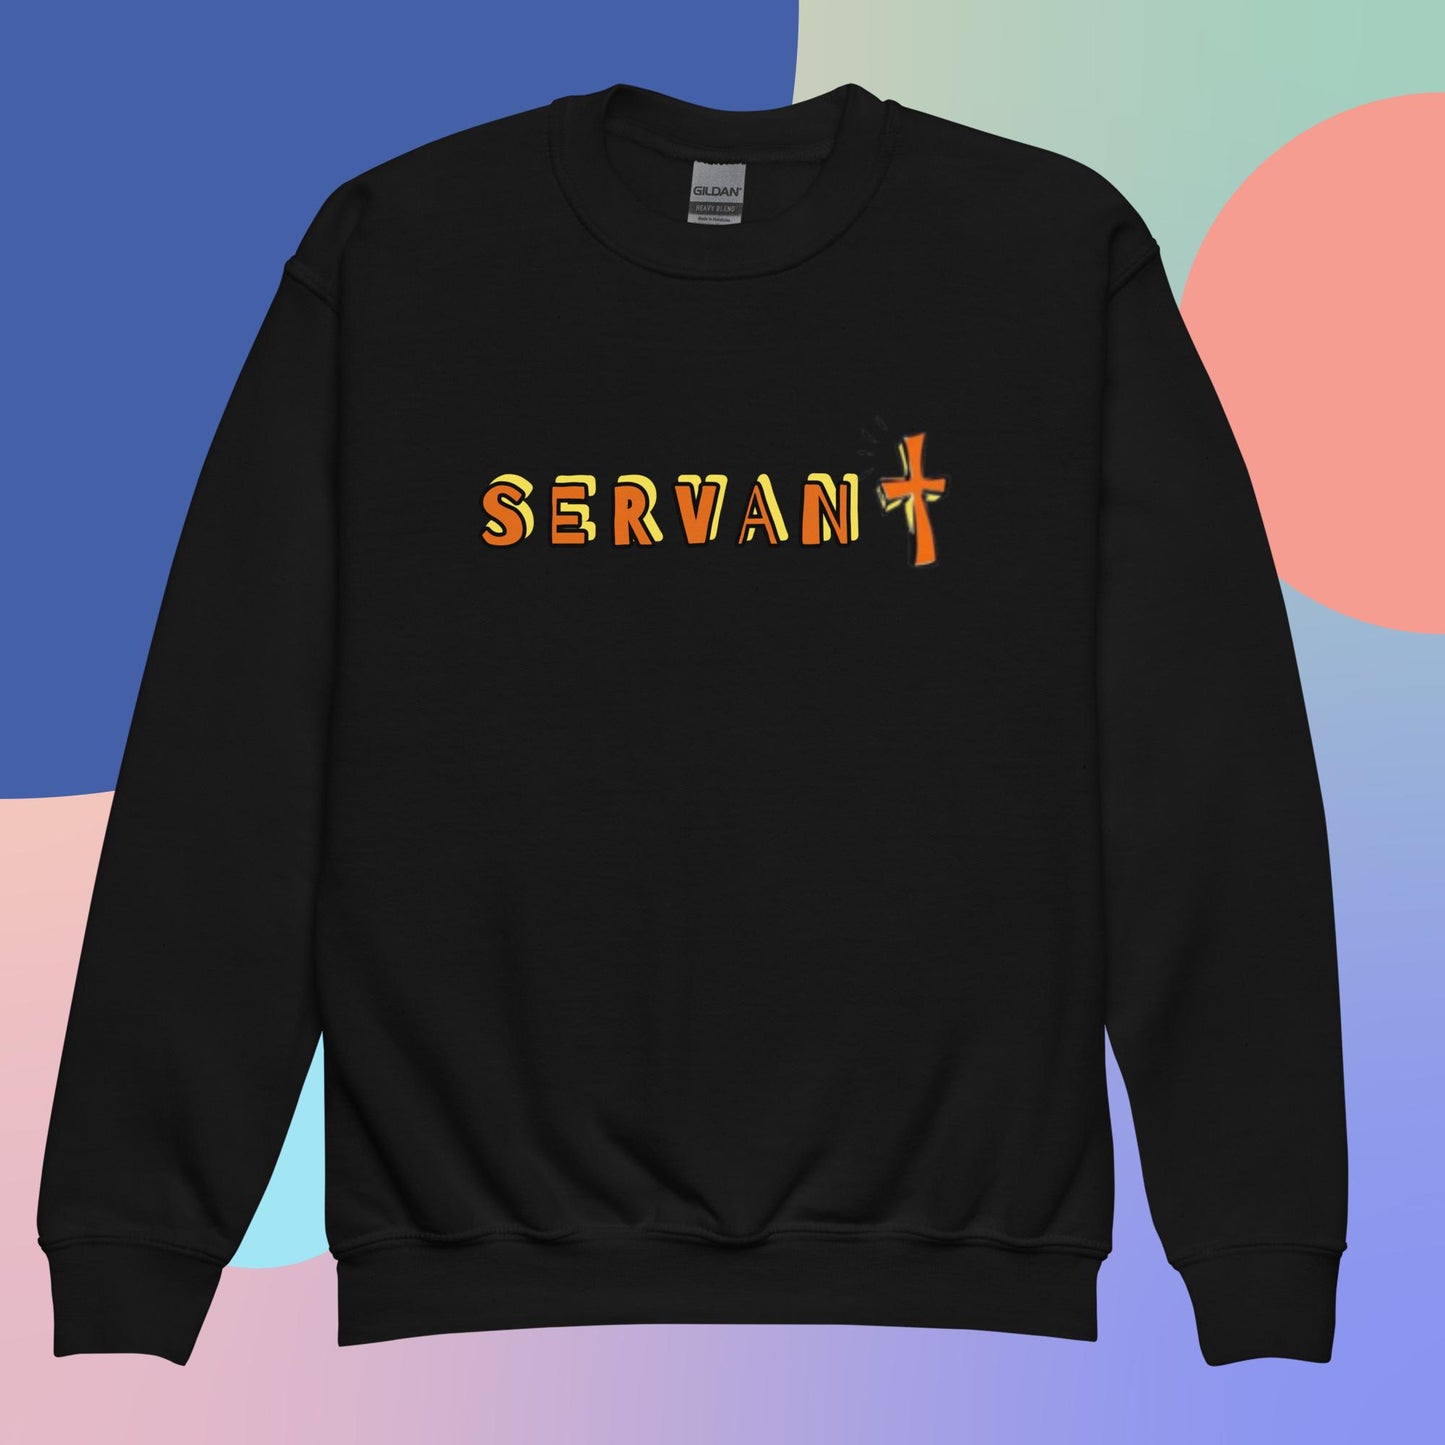 "SERVANT" Kids crewneck sweatshirt